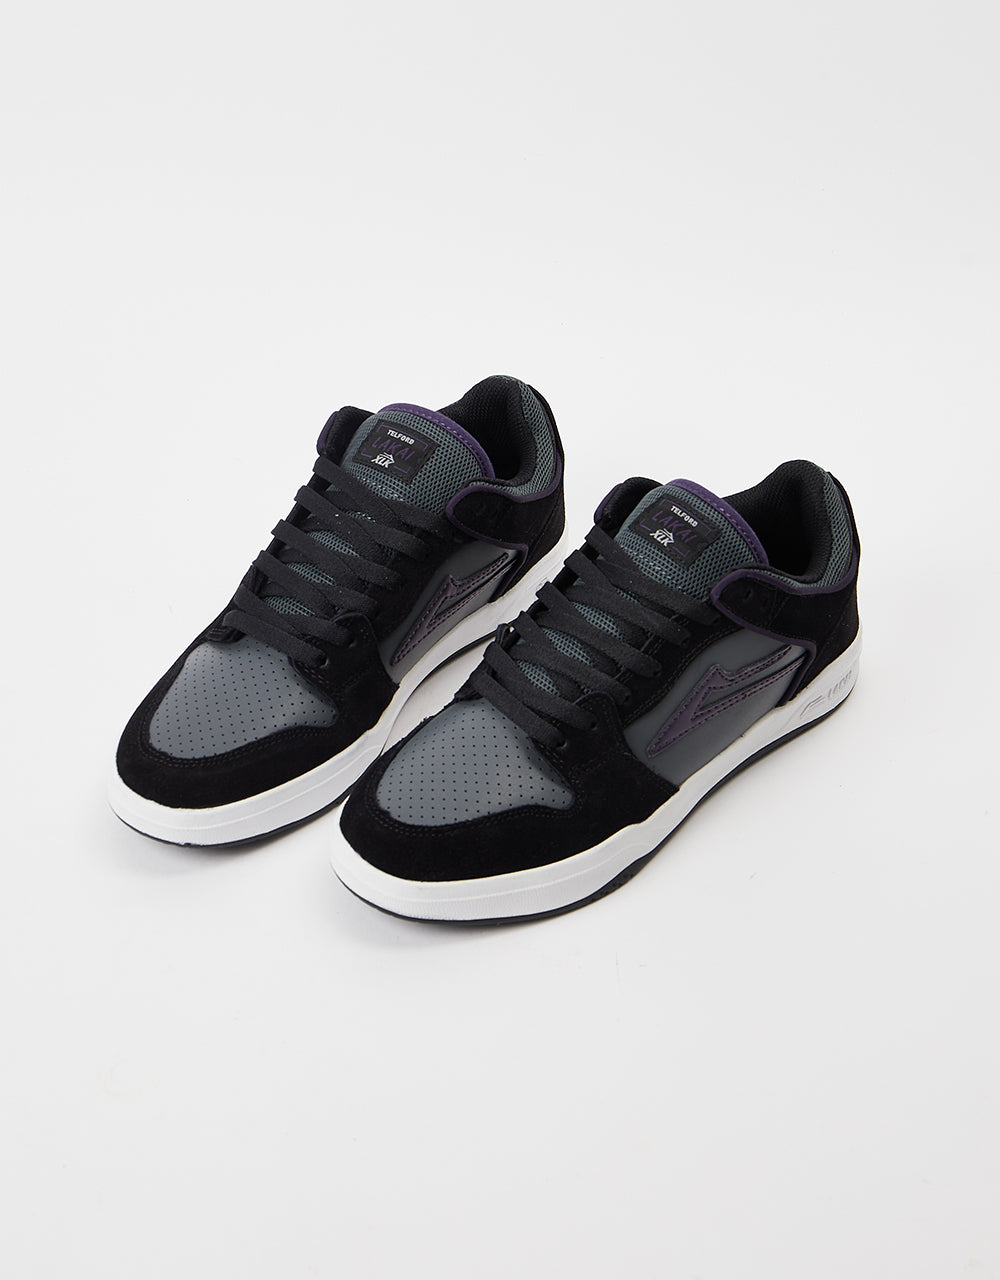 Lakai Telford Low Skate Shoes - Black/Grey Suede